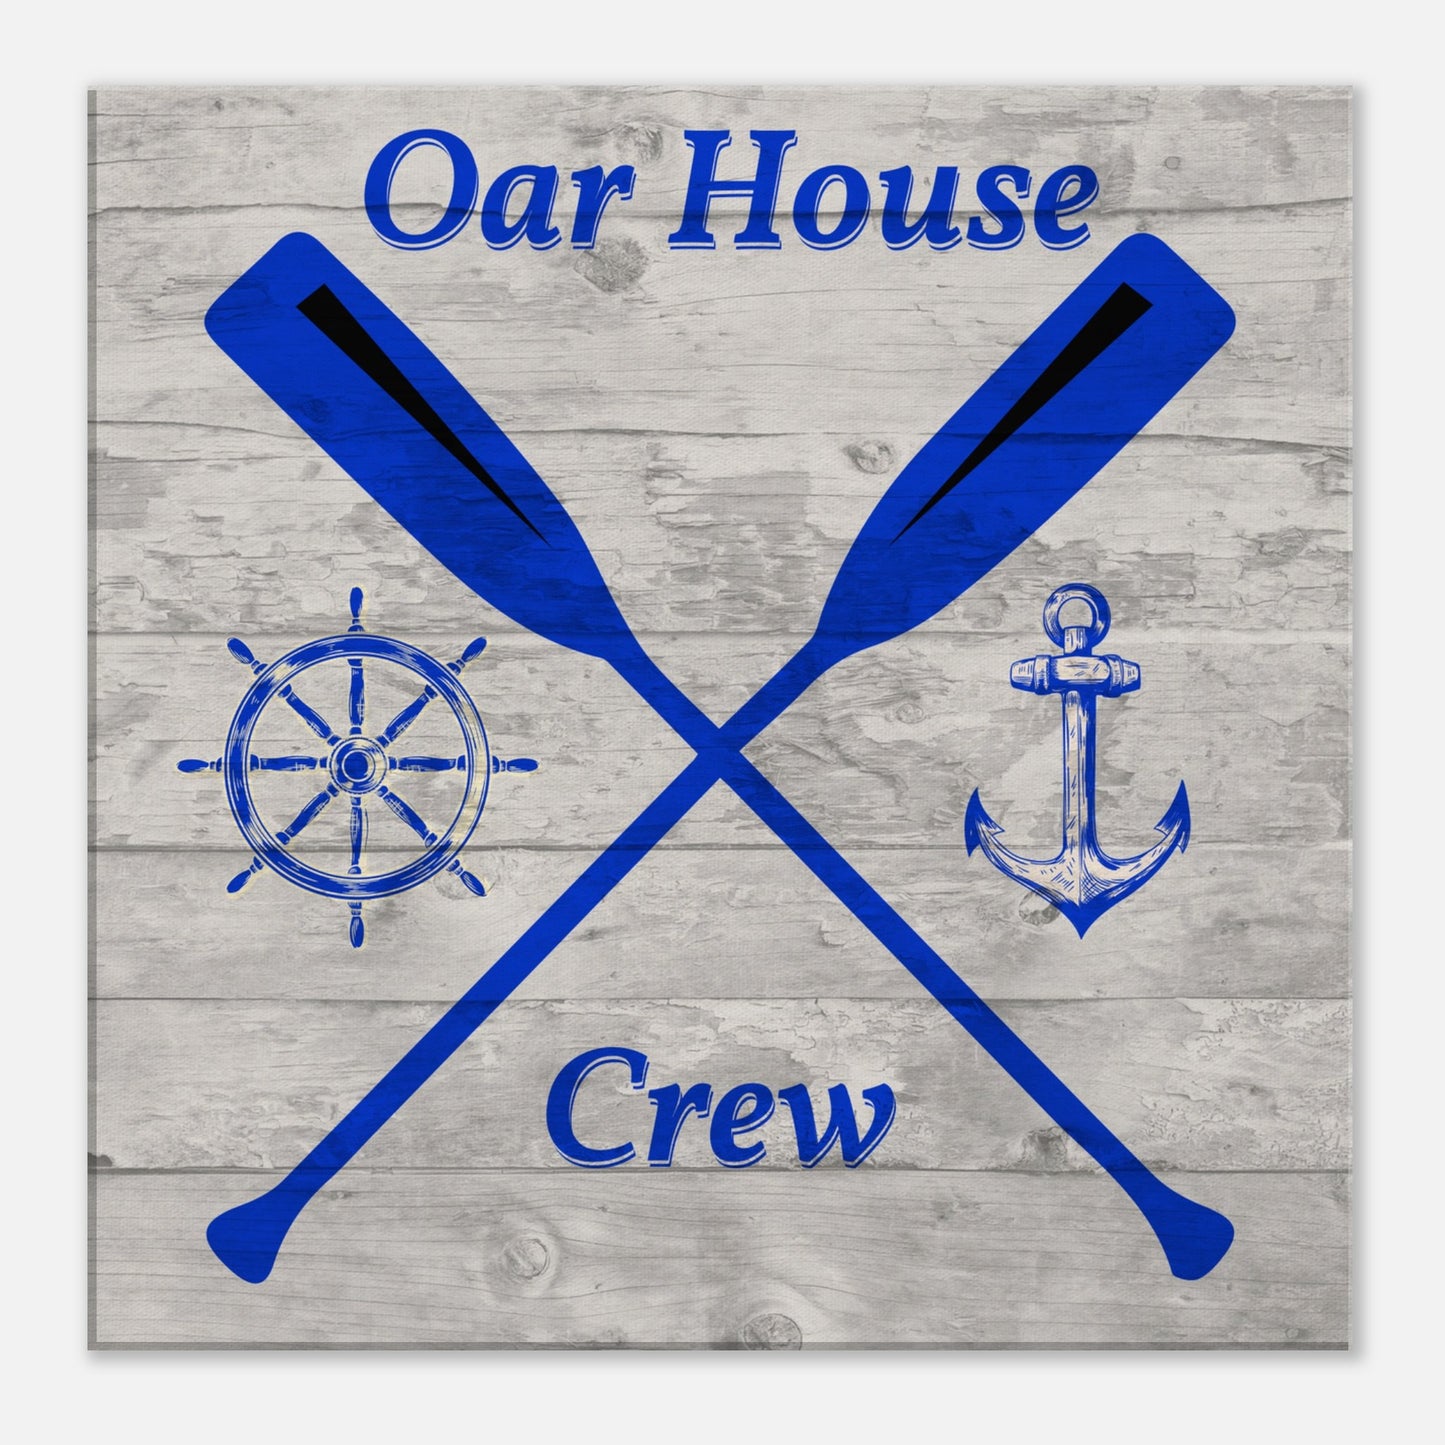 Oar House Crew Canvas Wall Print by Caribbean Rays